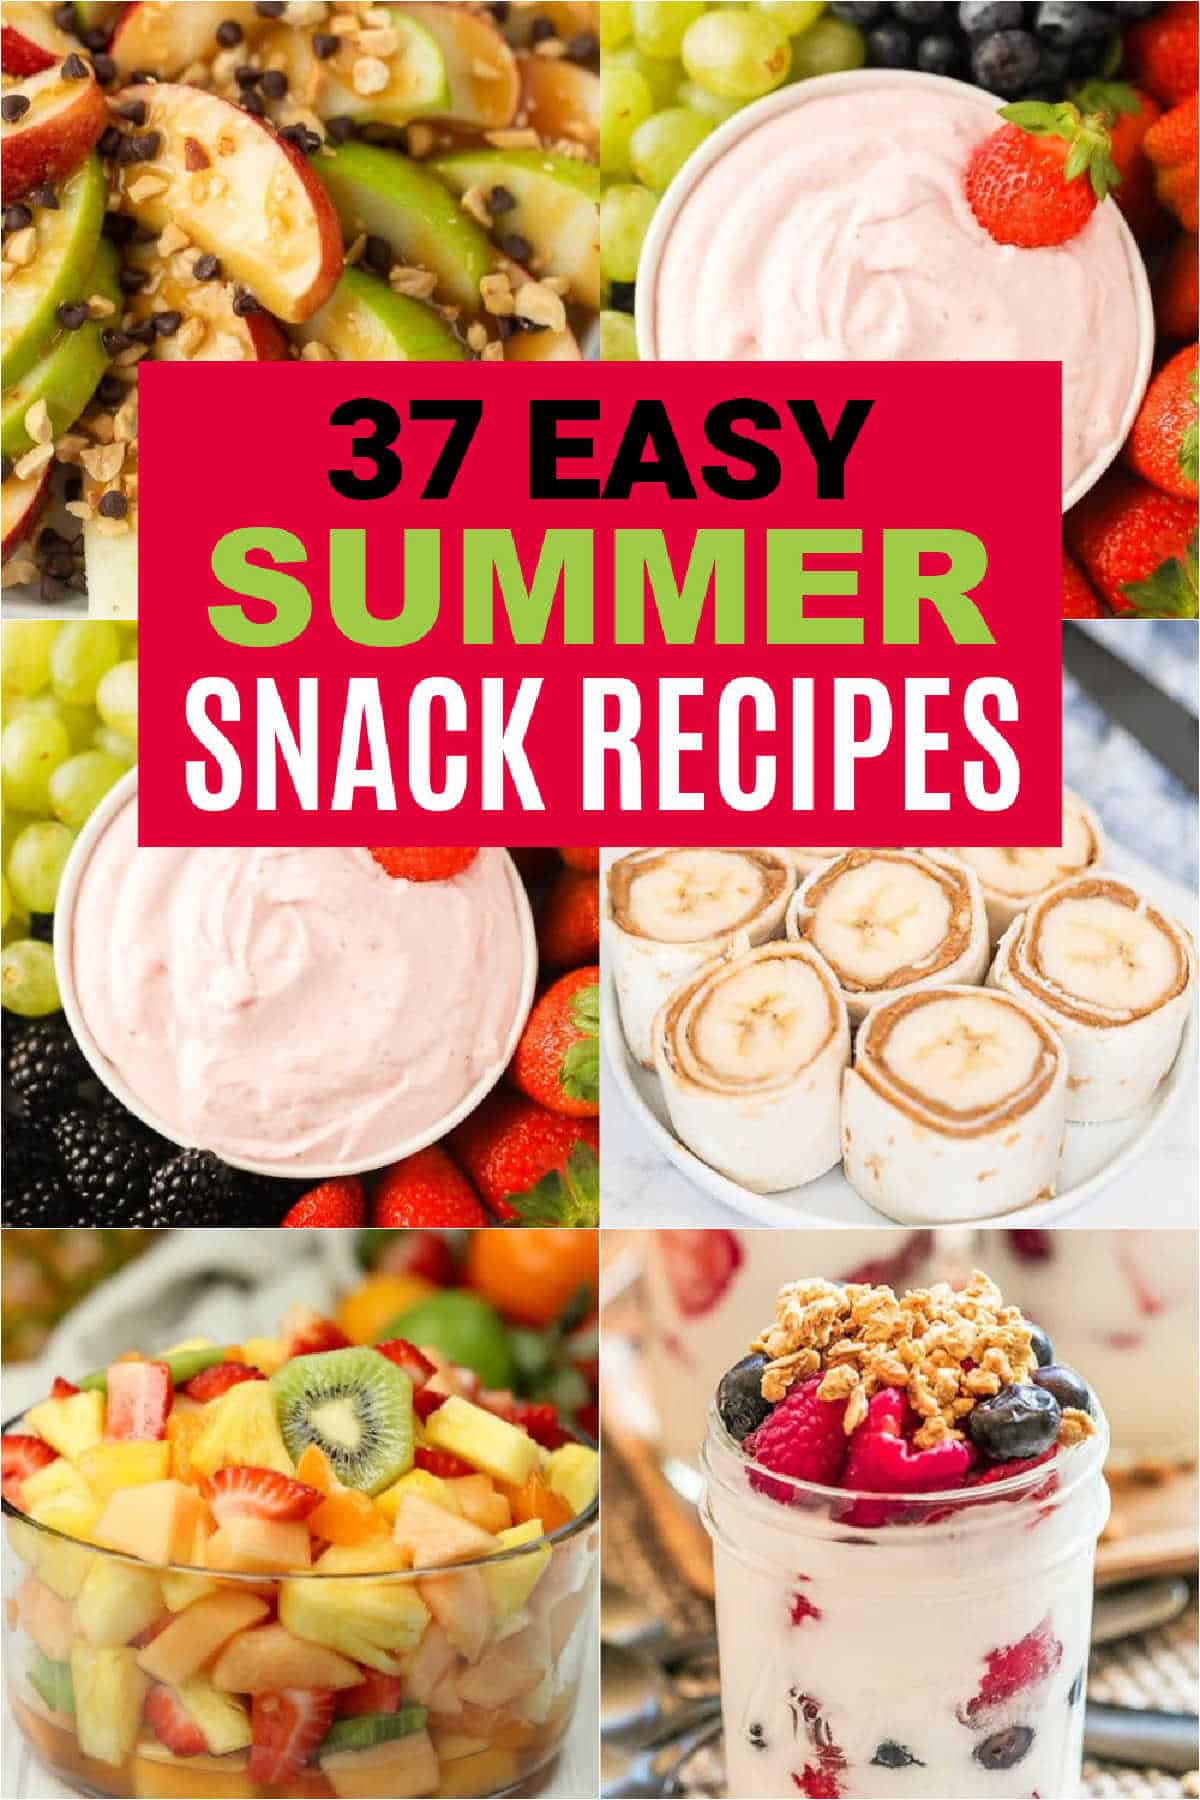 25 Super Cute Summer Snacks For Kids 